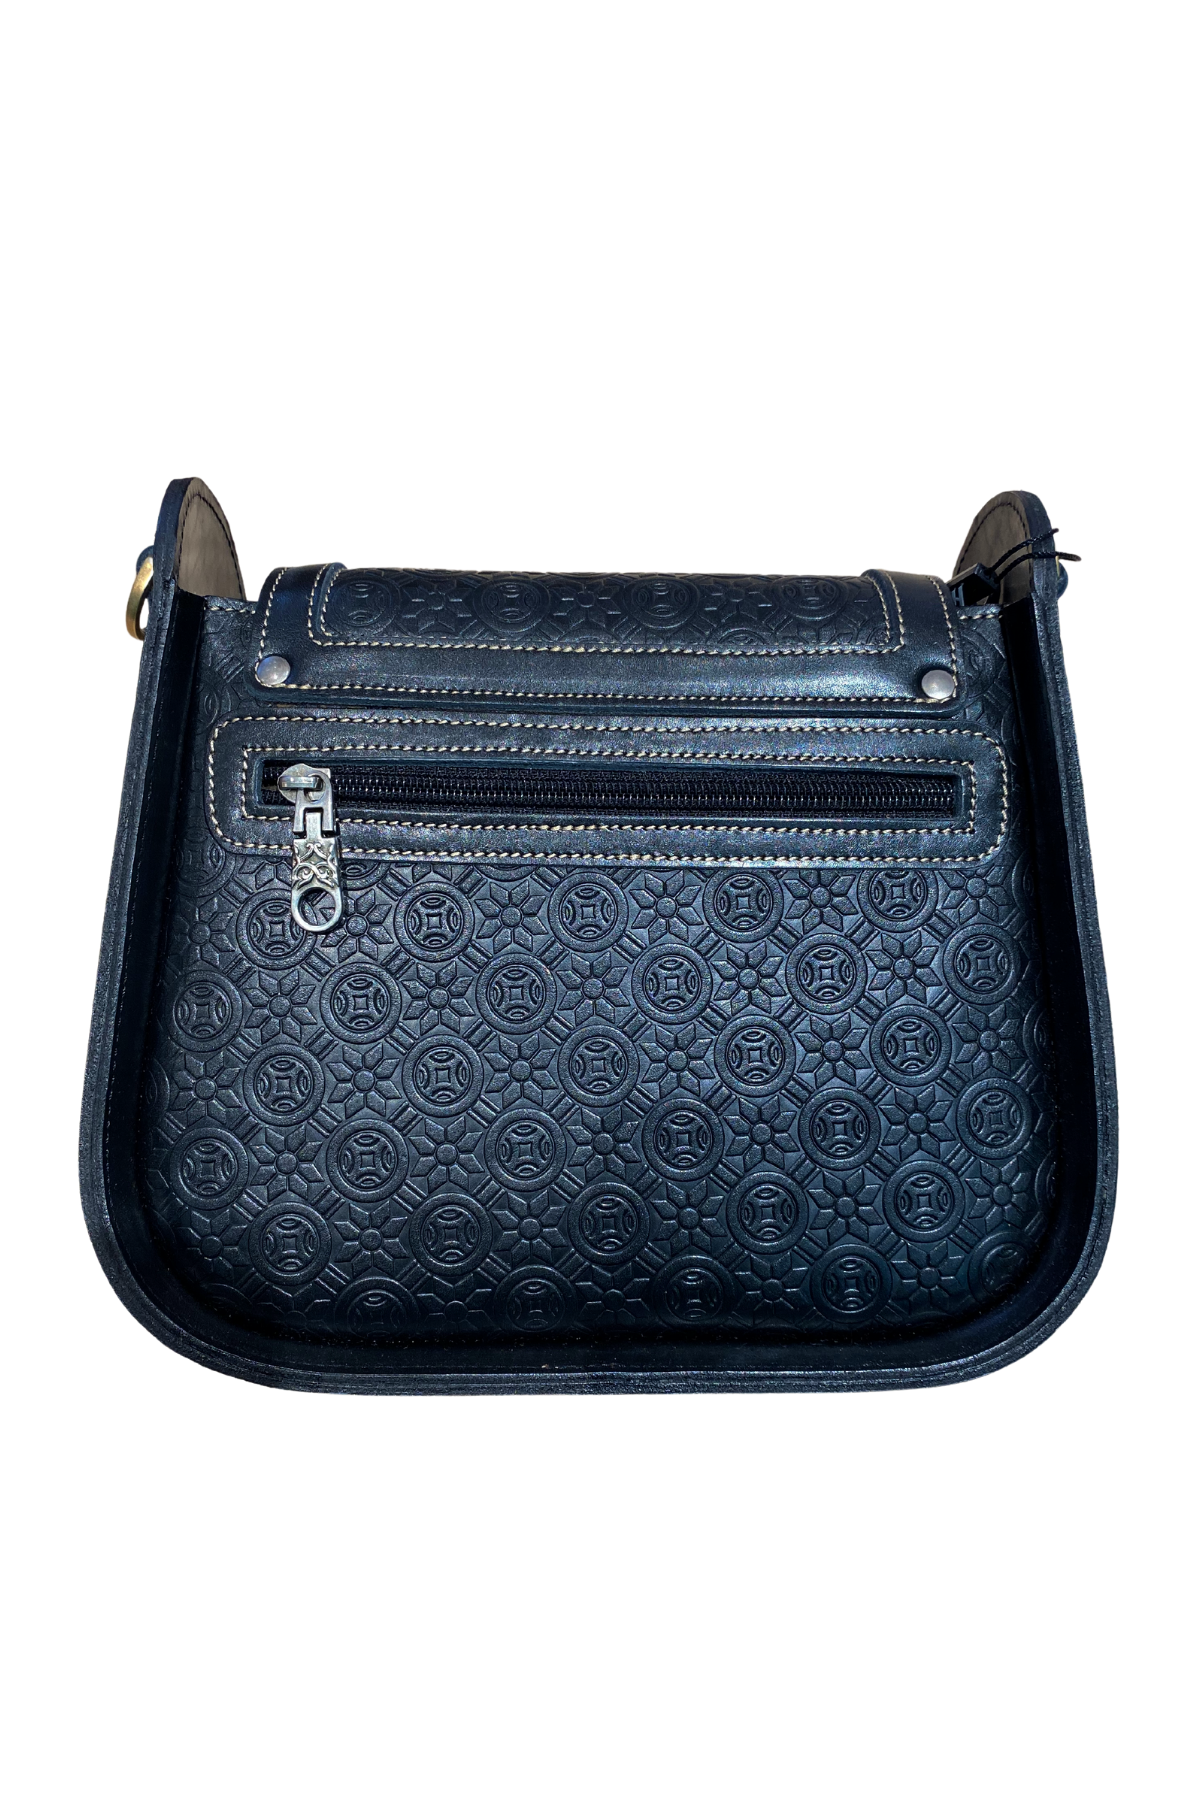 Medium Size Leather Handbag